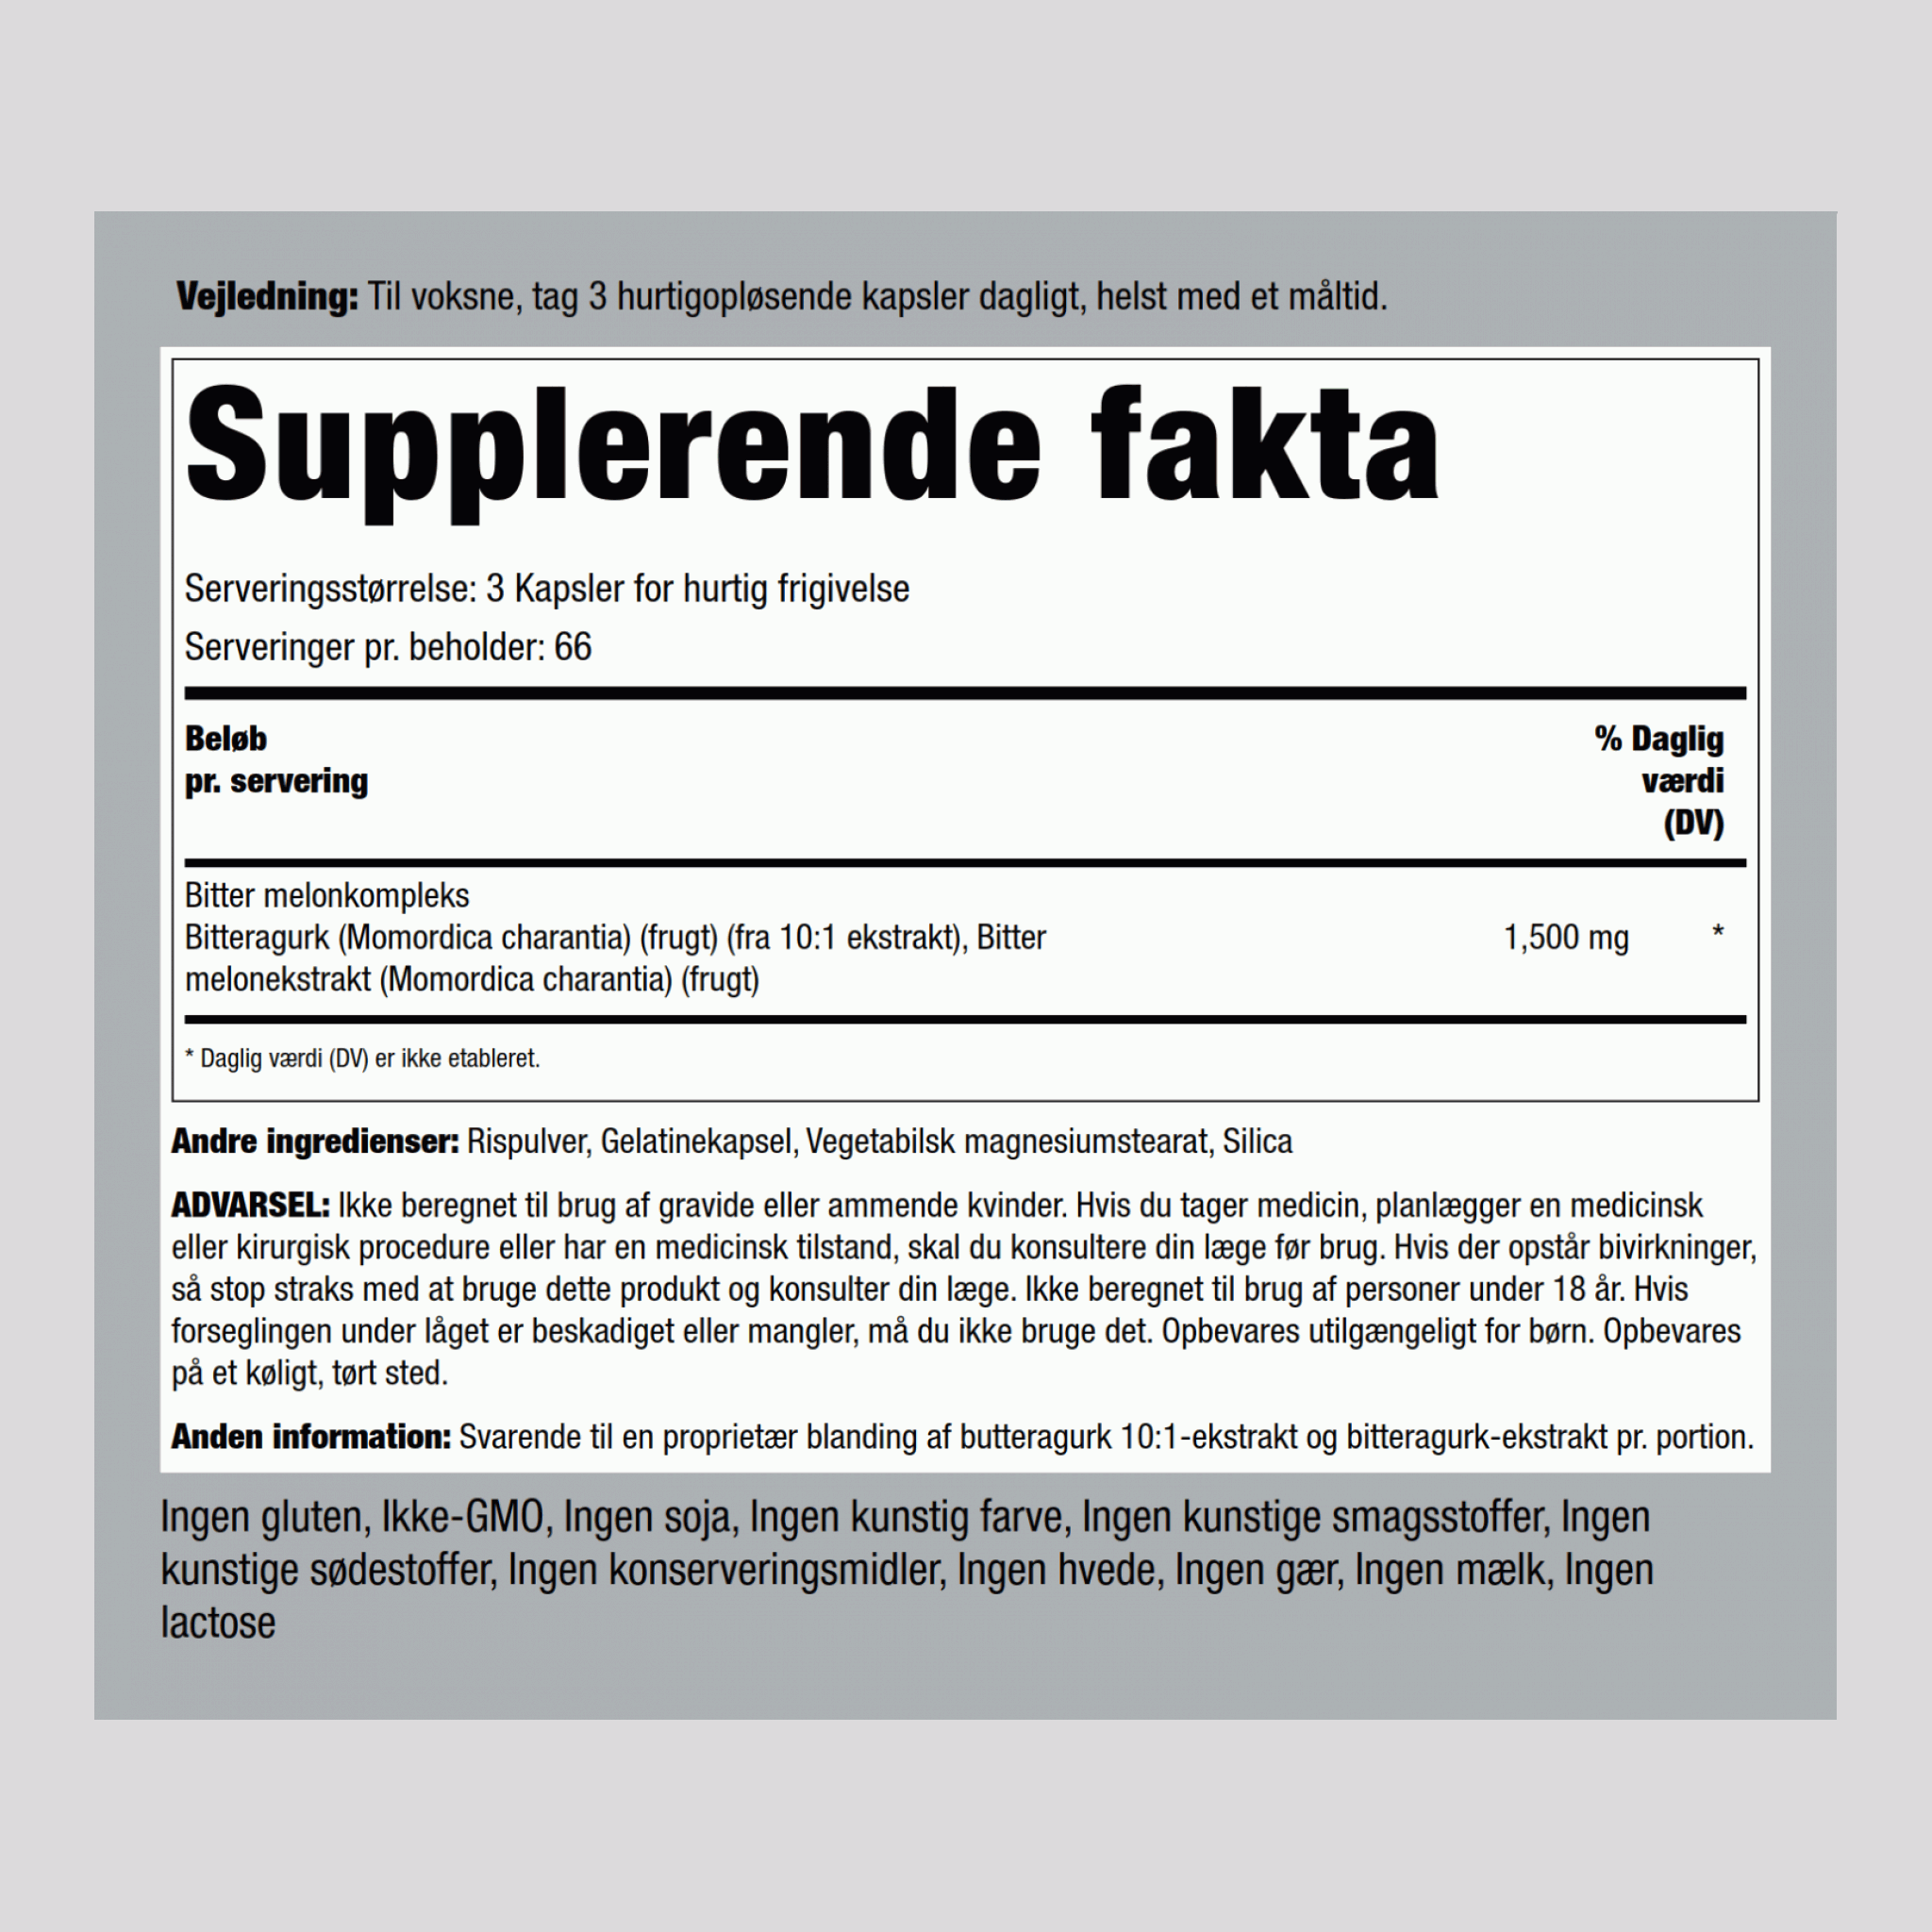 Momordica Bitter Melon, 1500 mg (per serving), 200 Quick Release Capsules, 2  Bottles